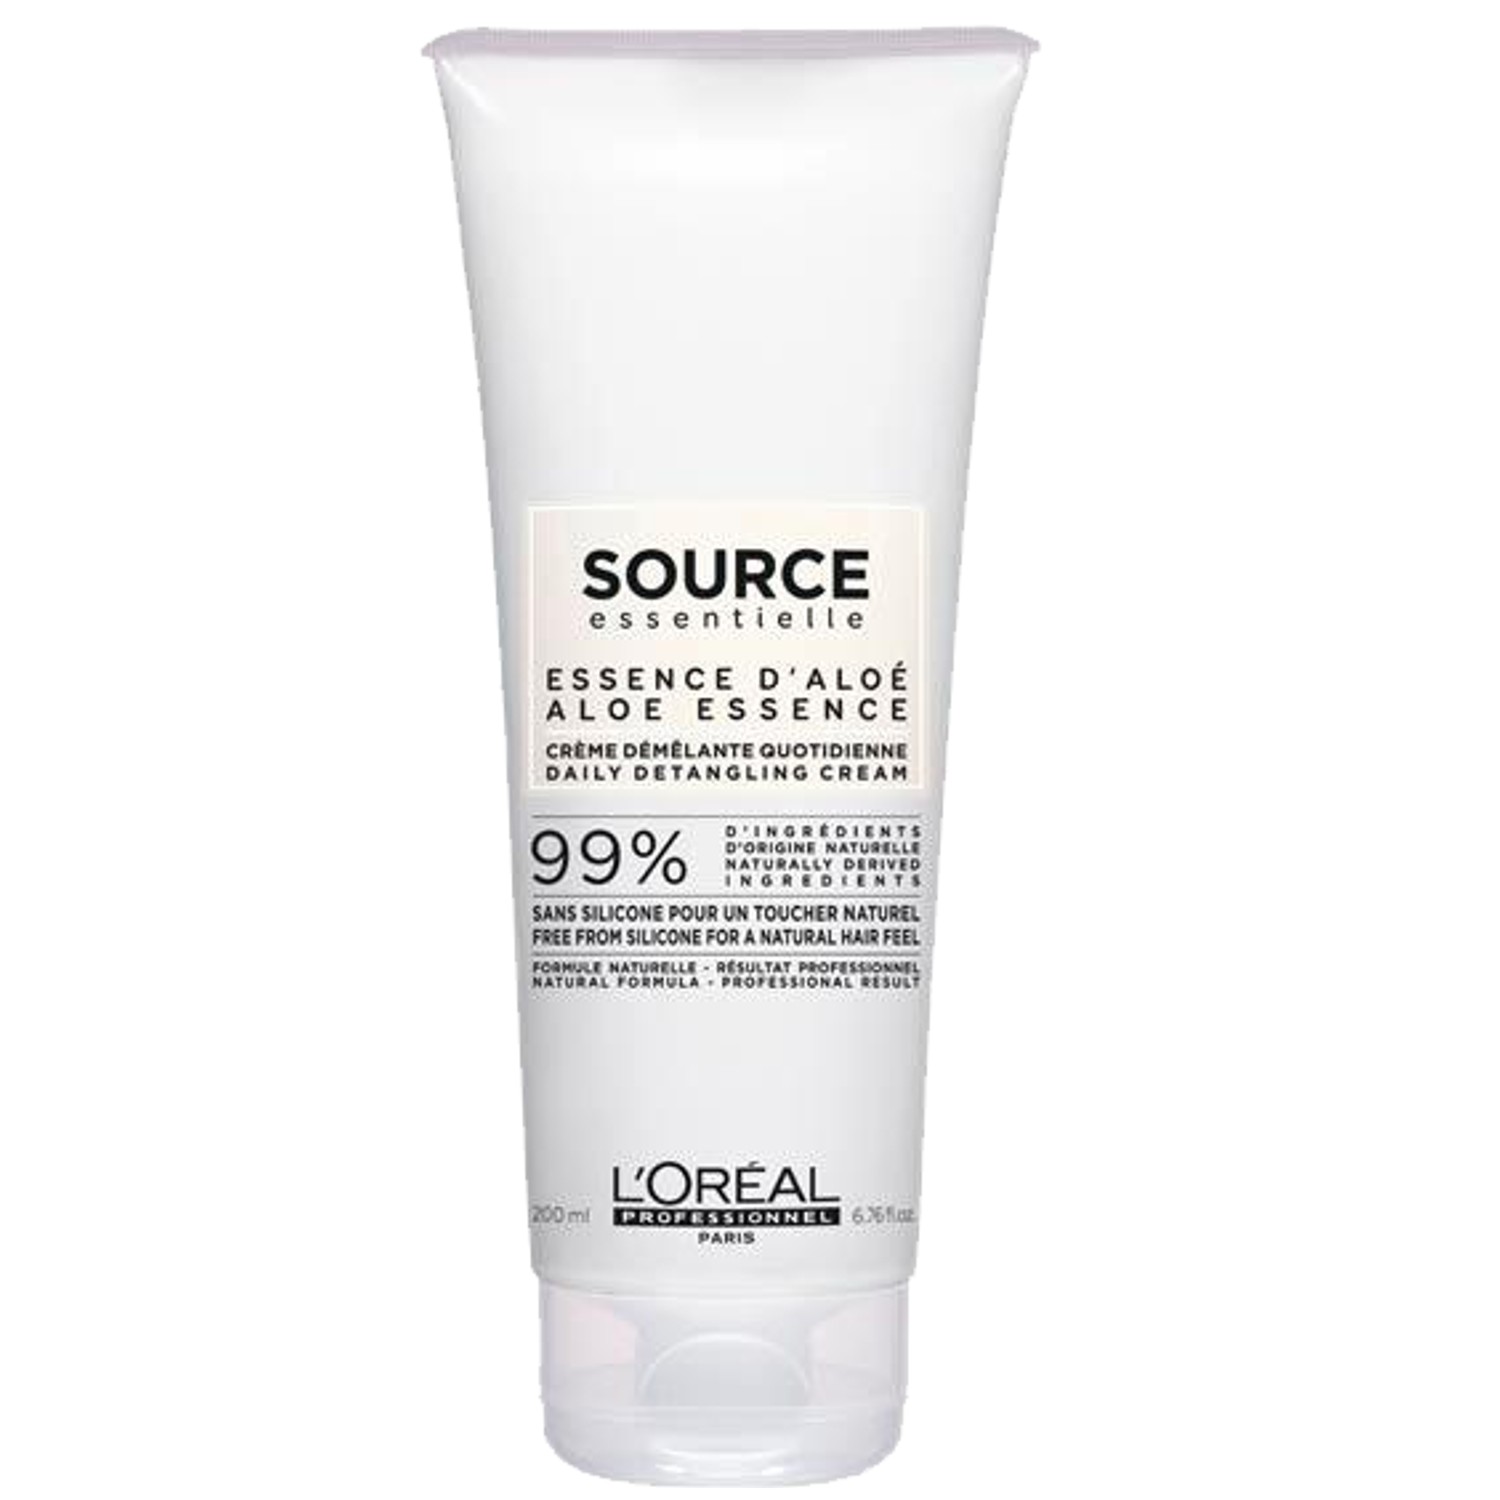 L'Oréal SOURCE ESSENTIELLE Daily Detangling Cream 200 ml